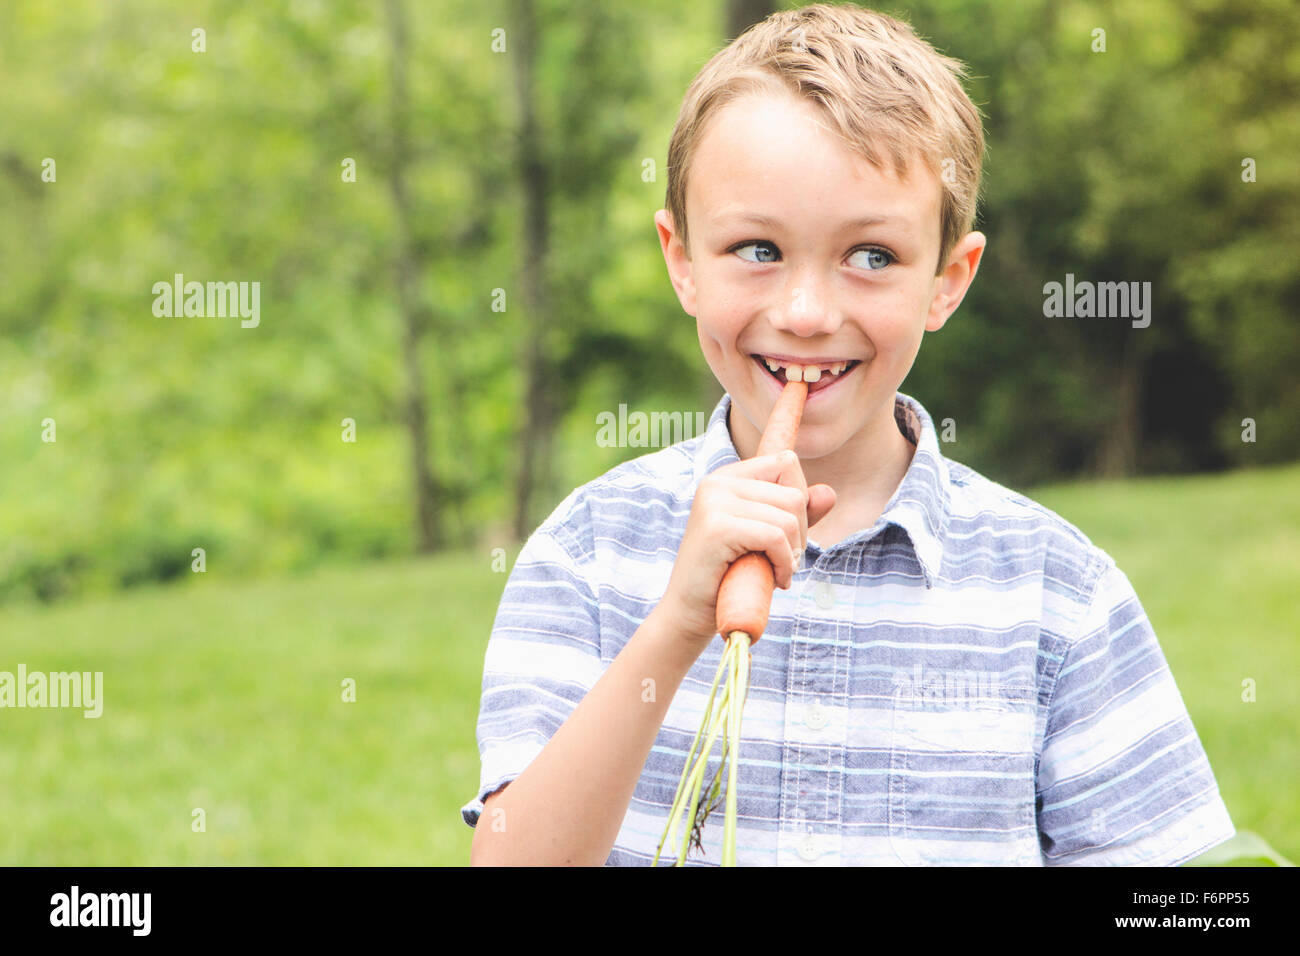 Caucasian boy eating carrot outdoors Stock Photo